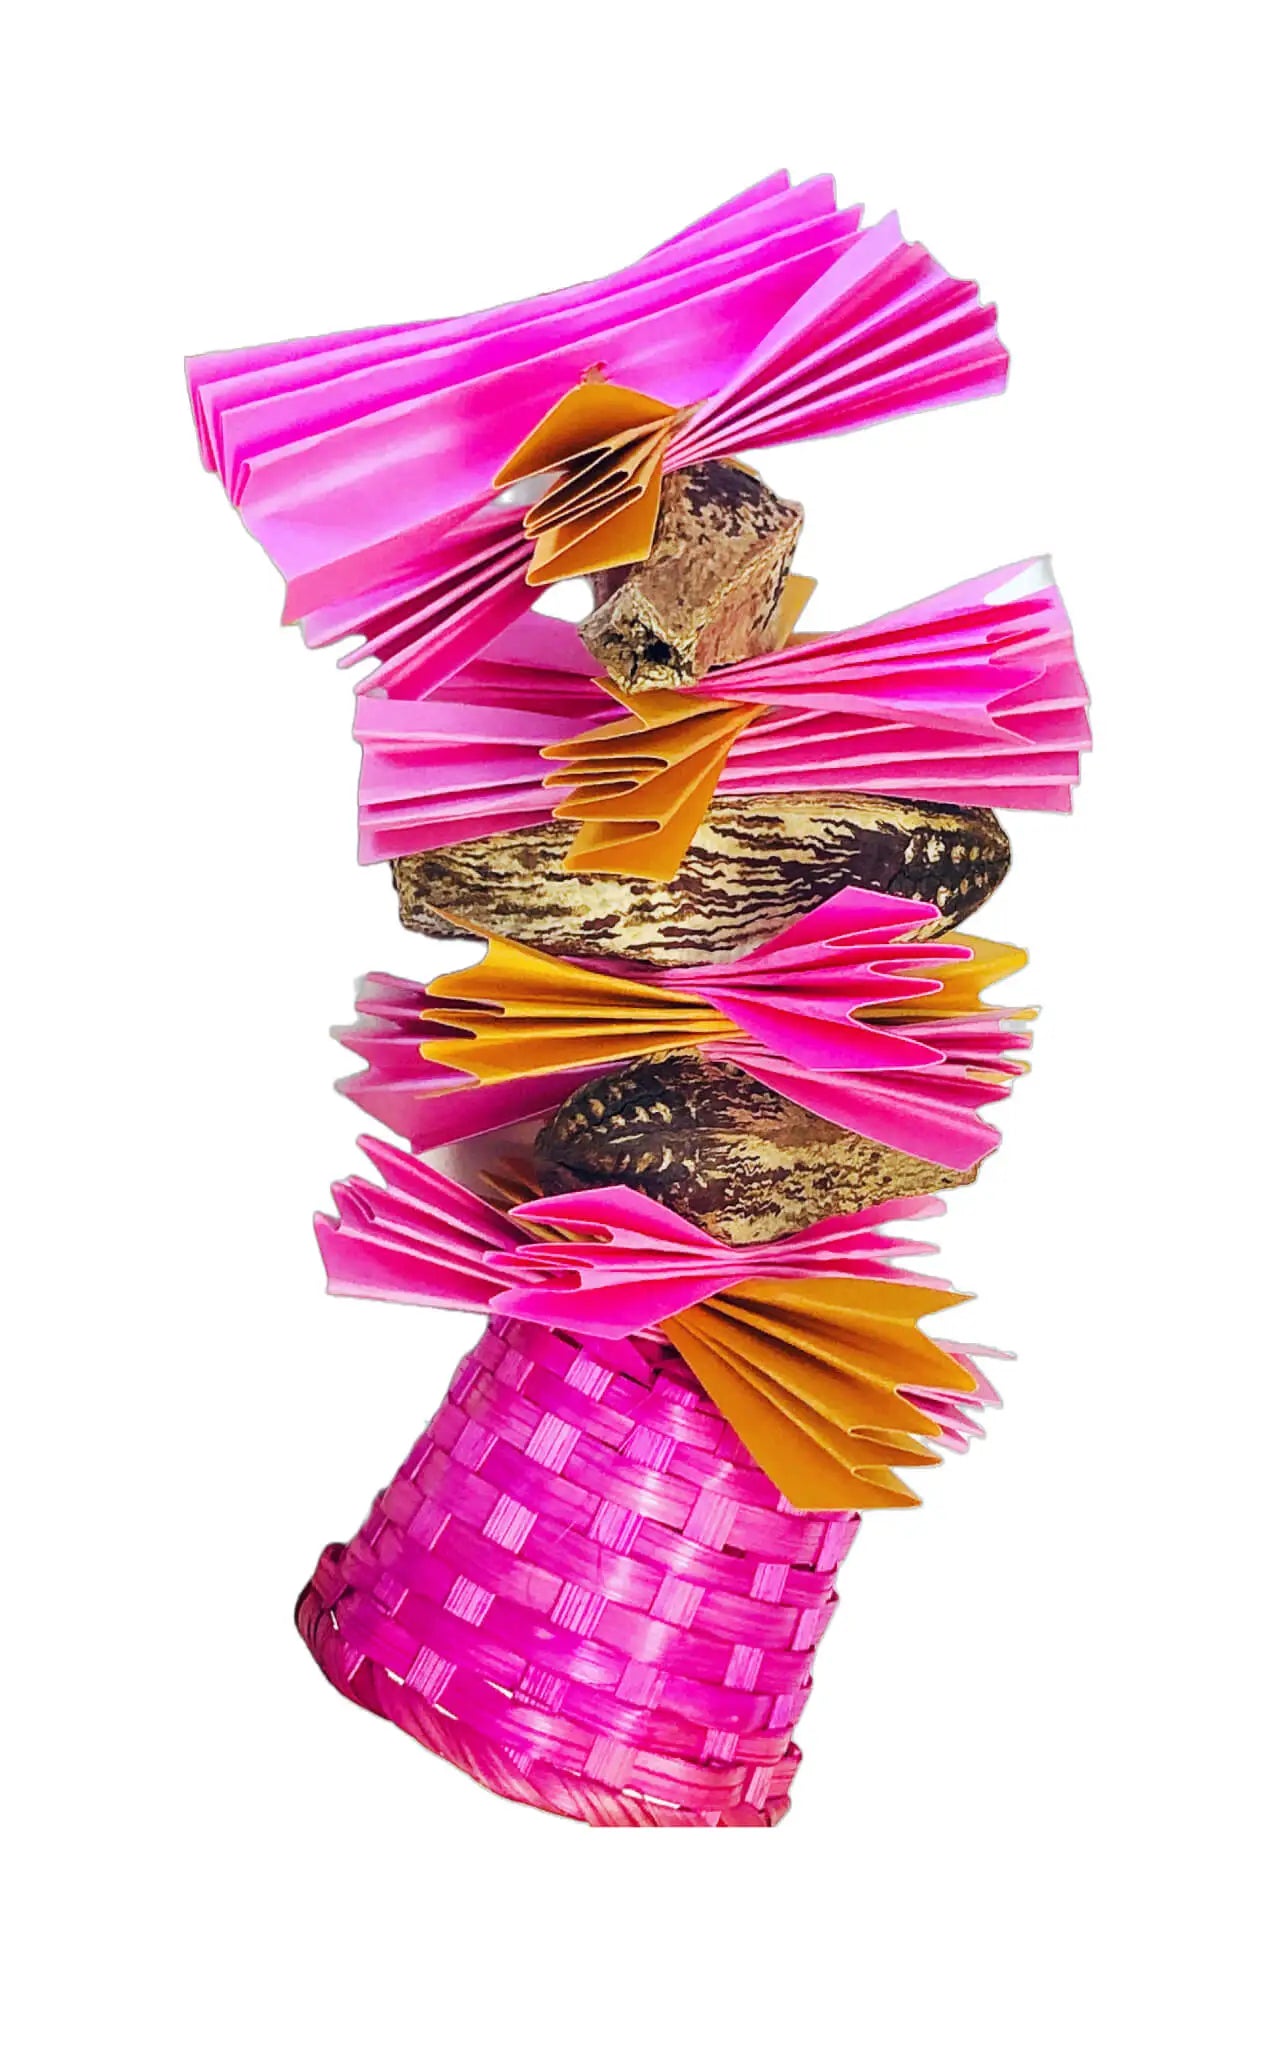 pink shreddable bird toys with basket